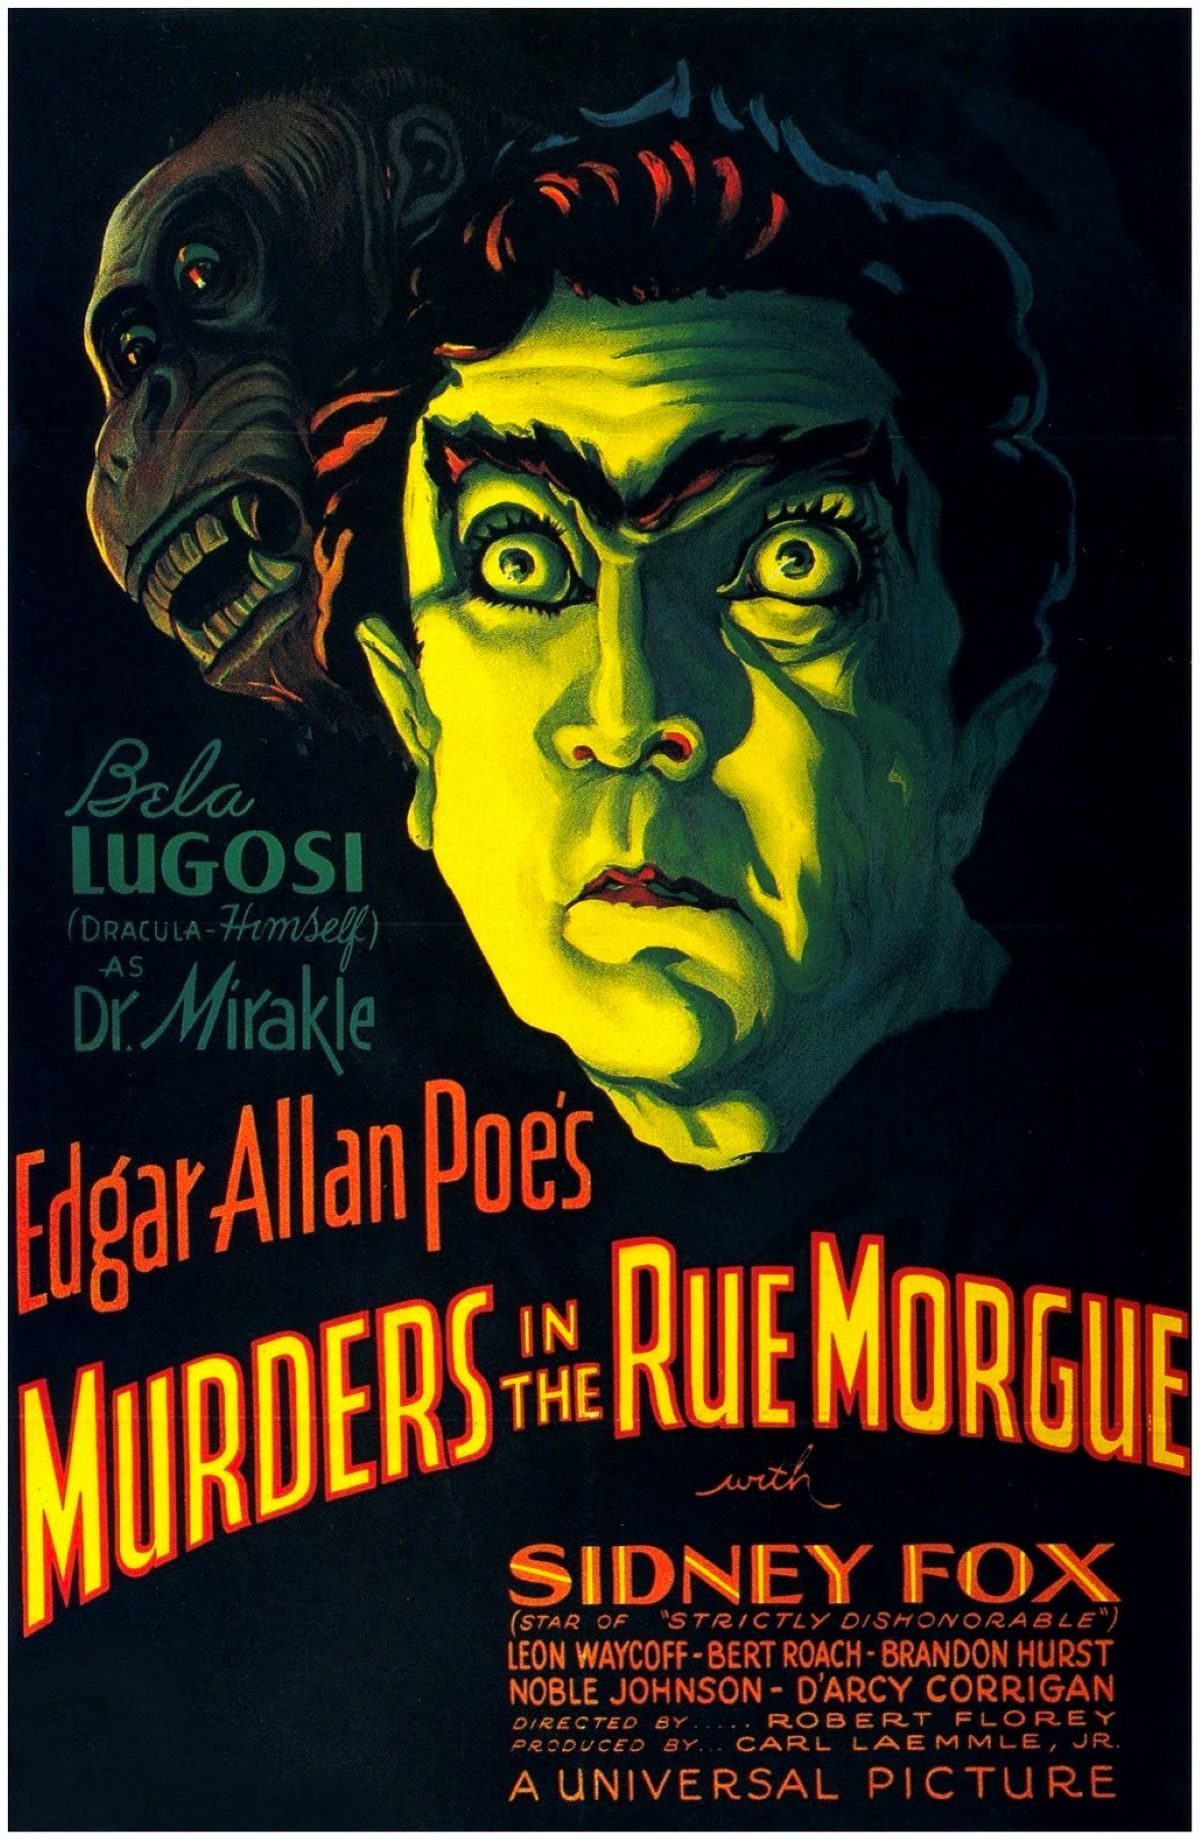 Bela Lugosi, Karoly Grosz, film posters, design, horror movies, books, Edgar, Allan Poe